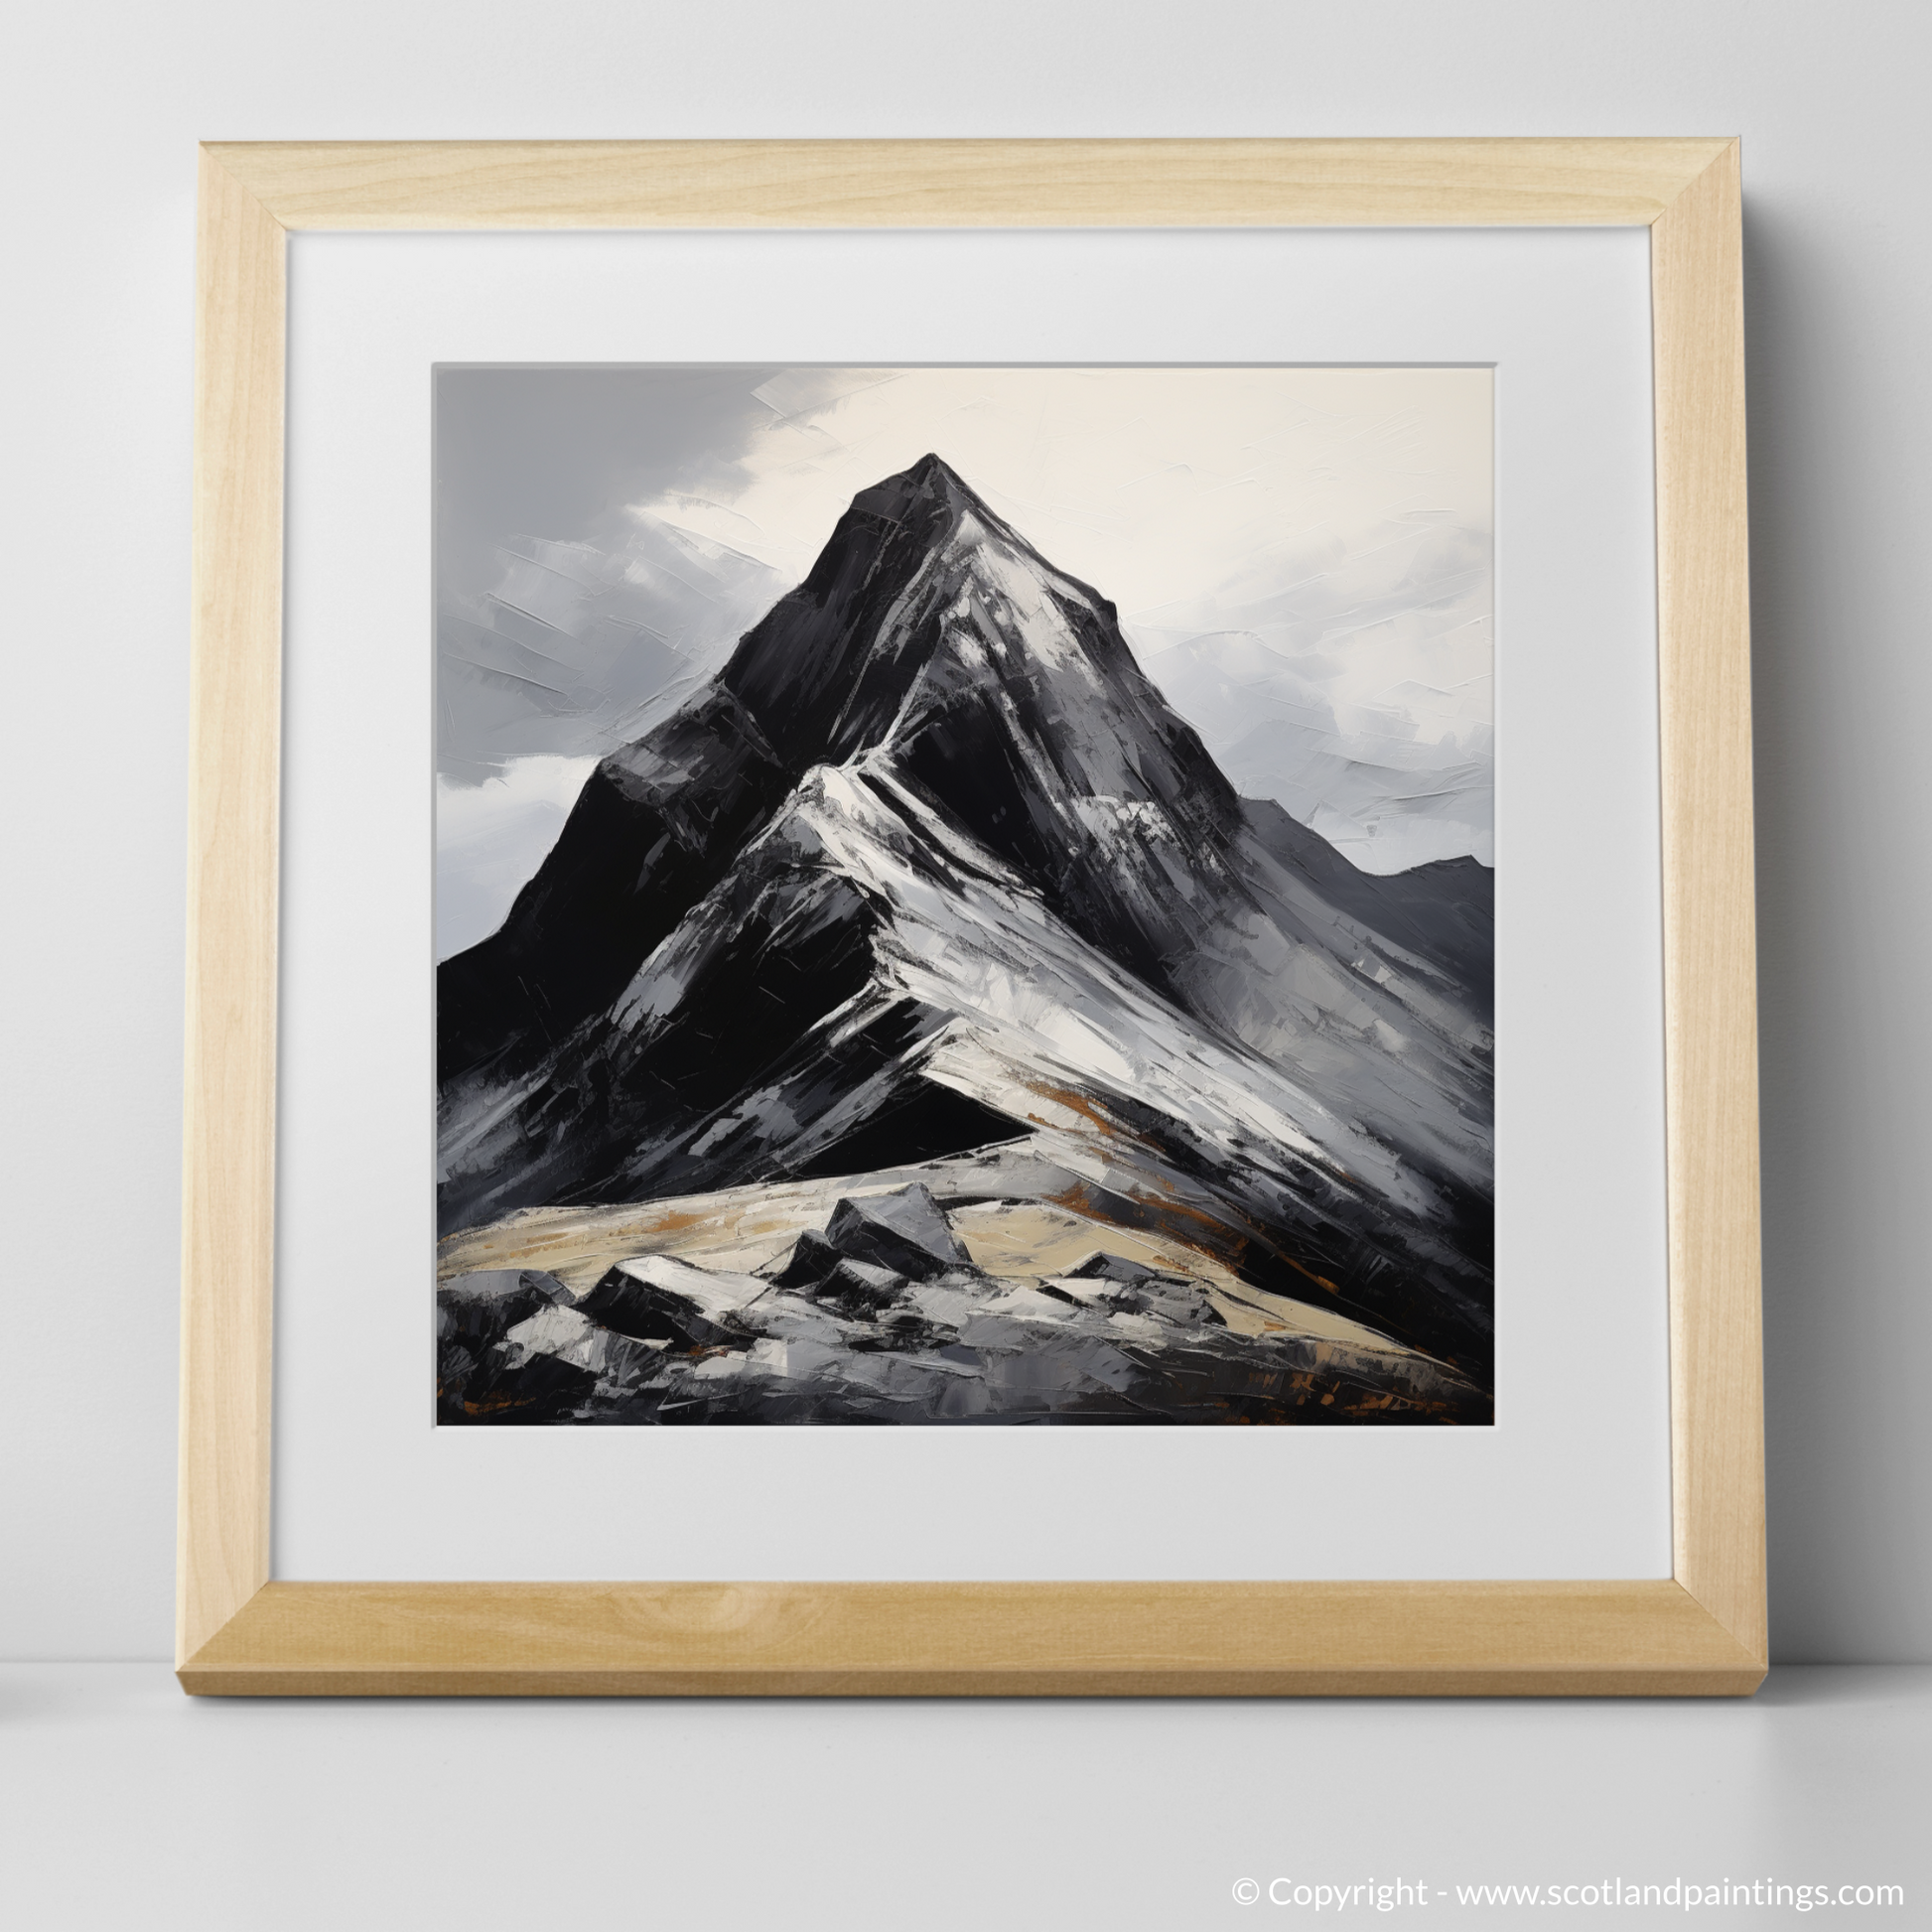 Art Print of Sgurr Dearg, Highlands with a natural frame